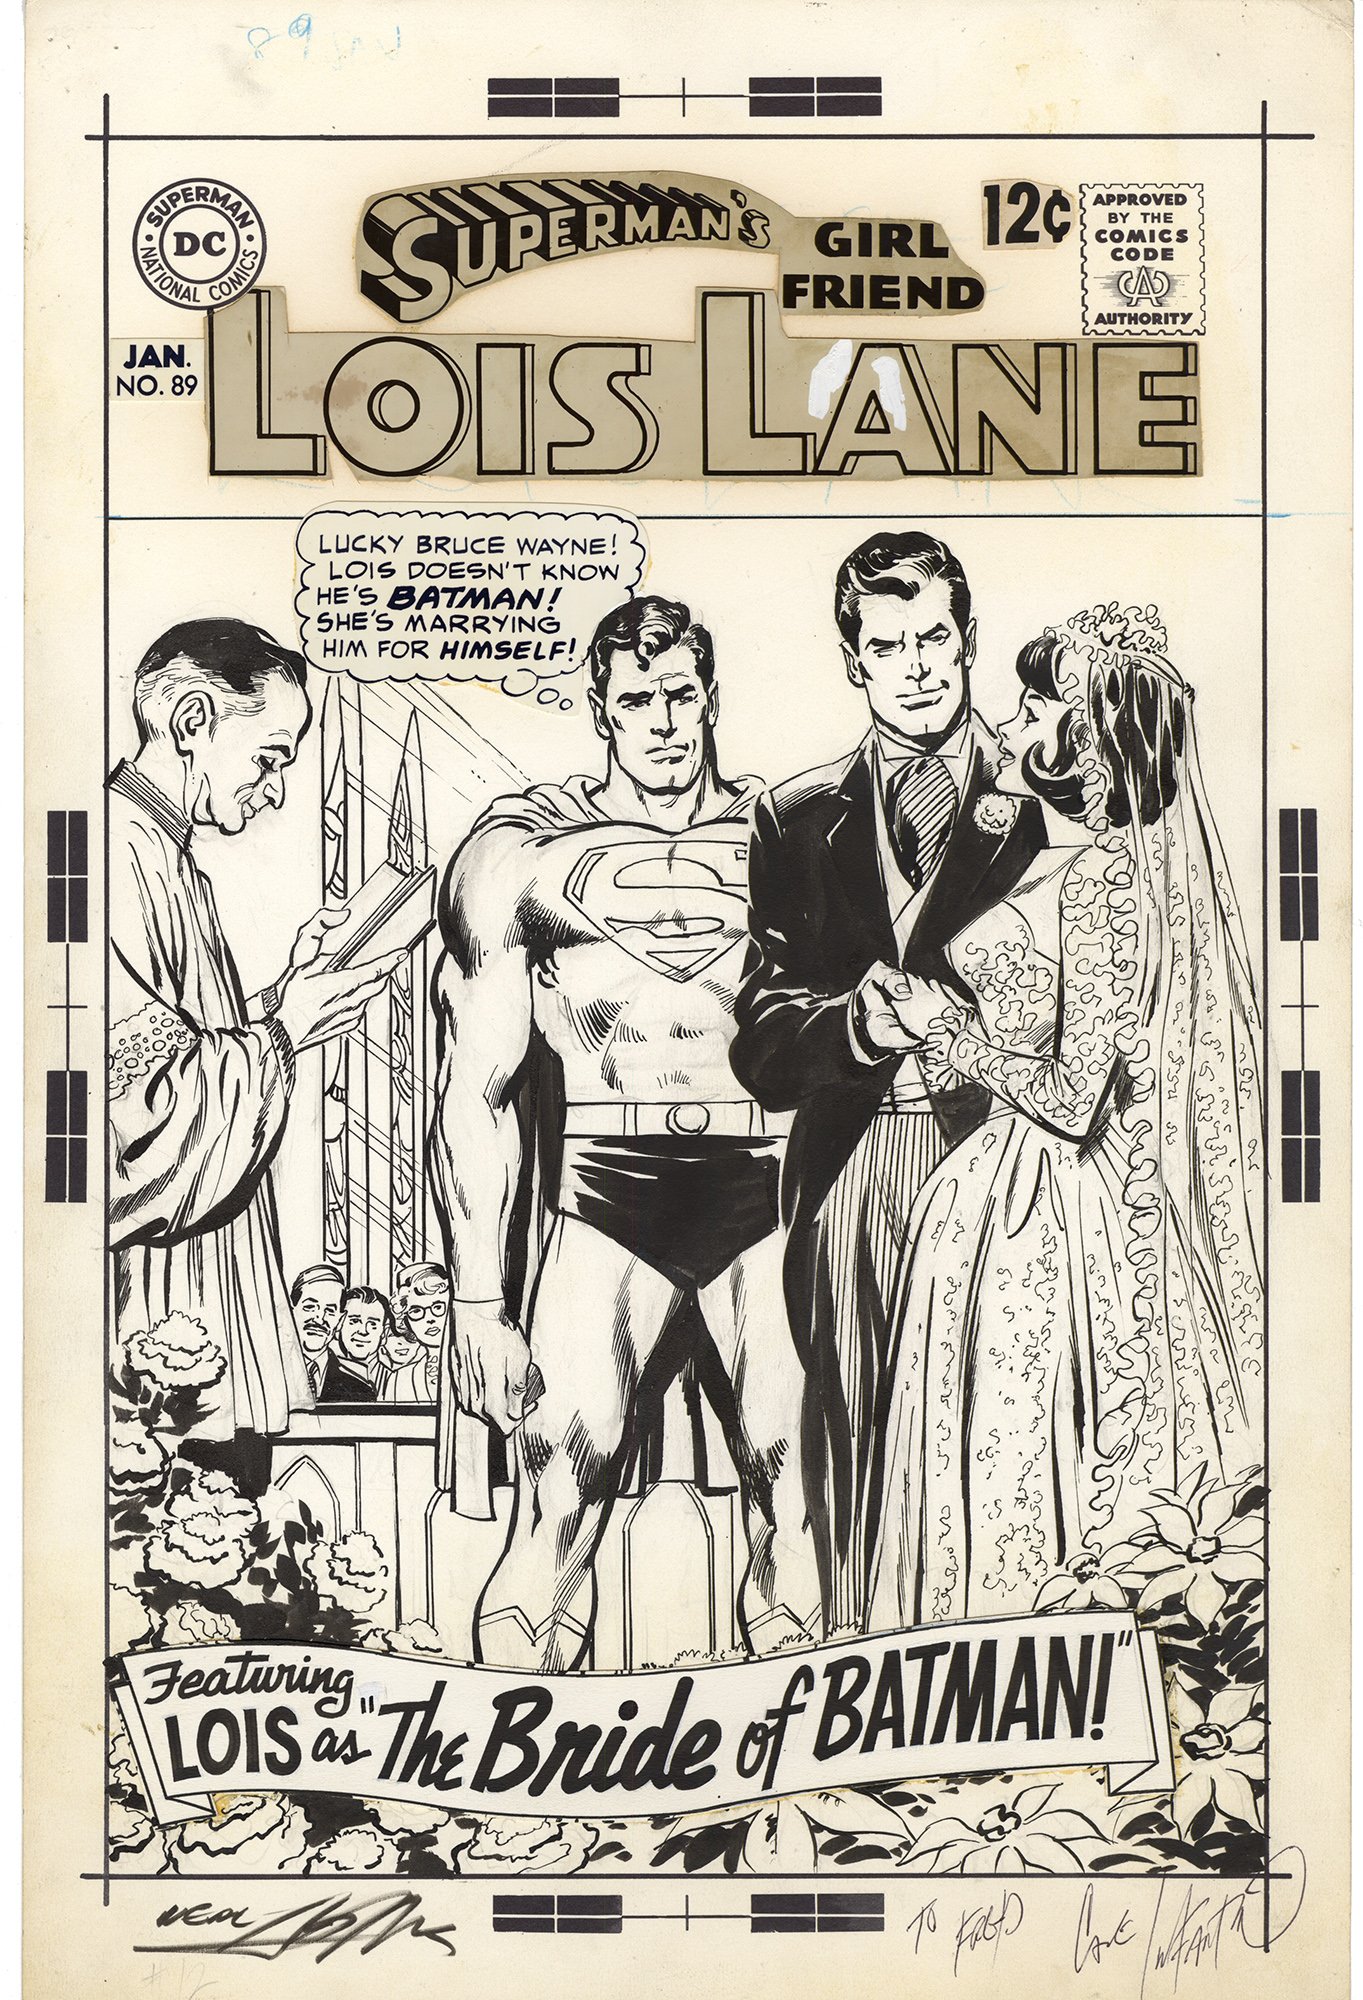 Superman’s Girl Friend Lois Lane #89 Cover (Neal Adams)